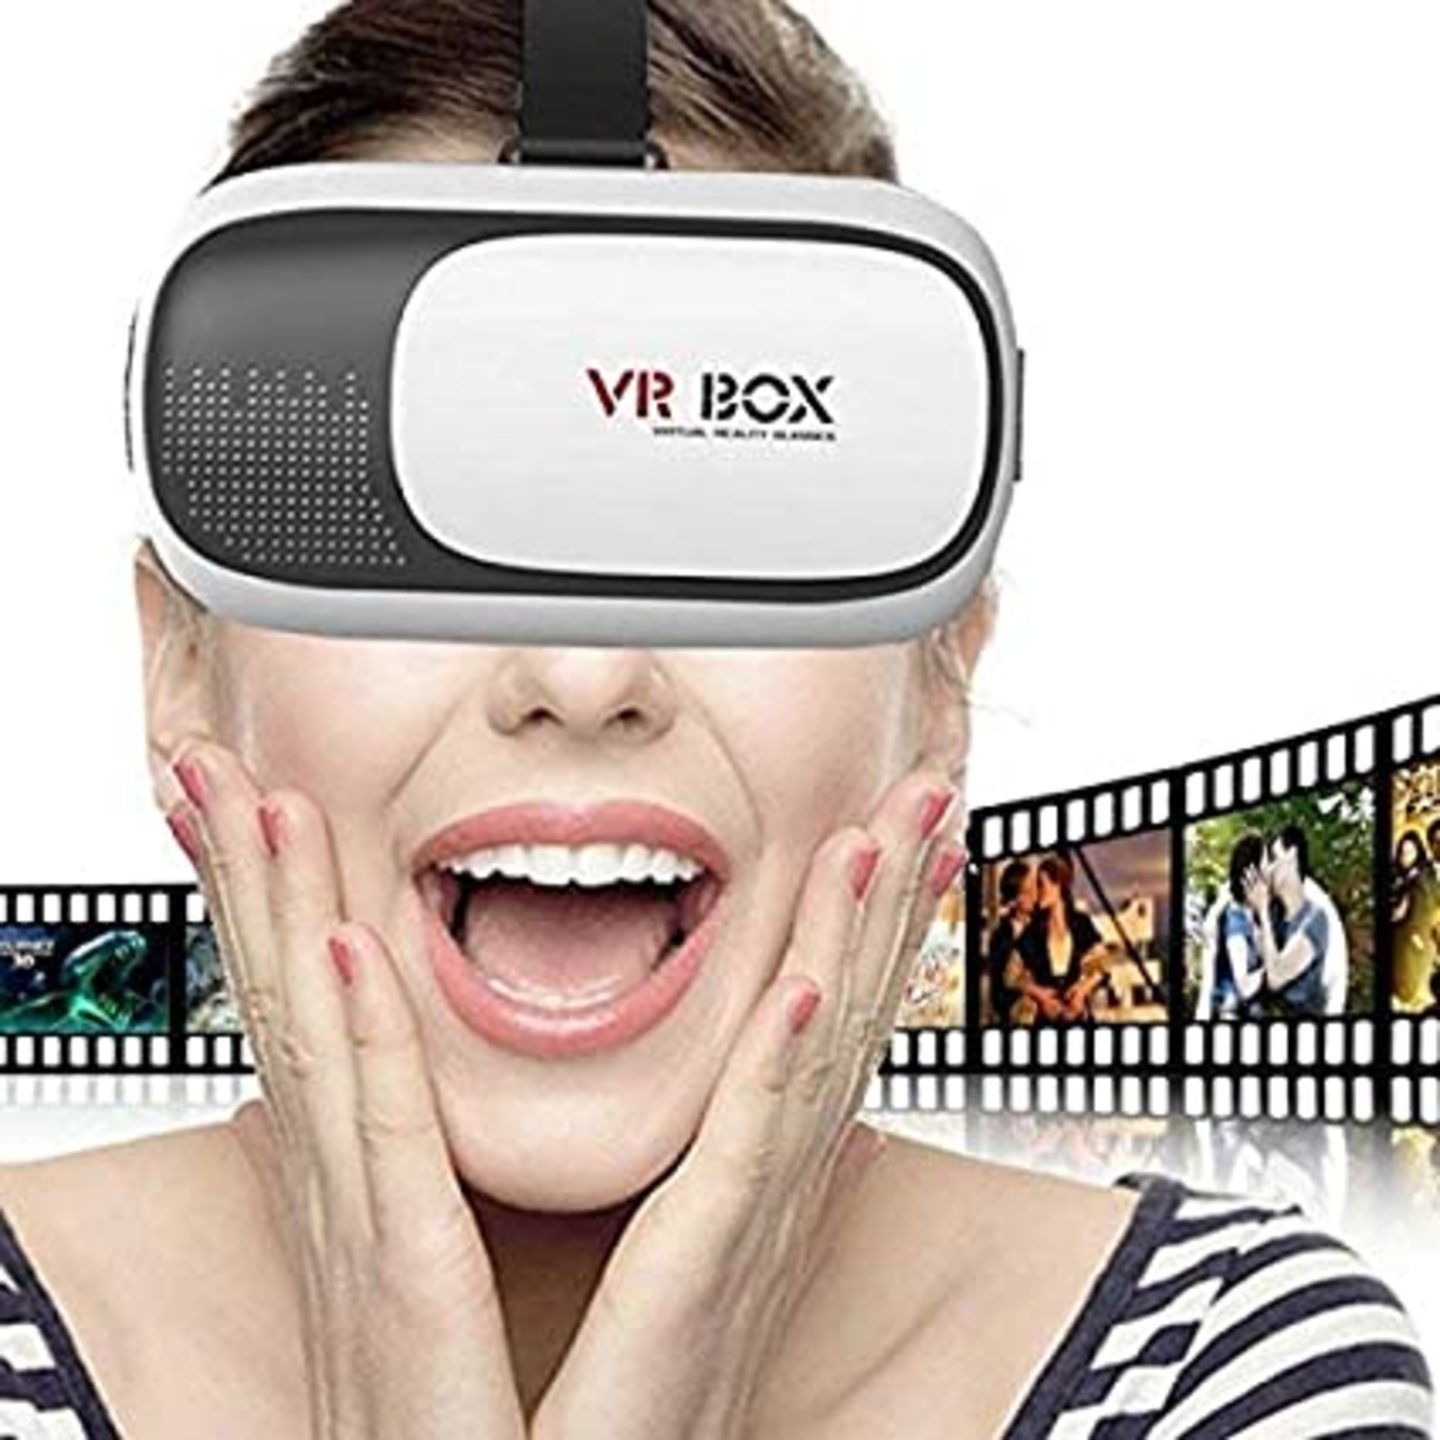 JonPrix Virtual Reality 3D Glasses VR BOX 2.0 Headset for Smart Phones VR BOX